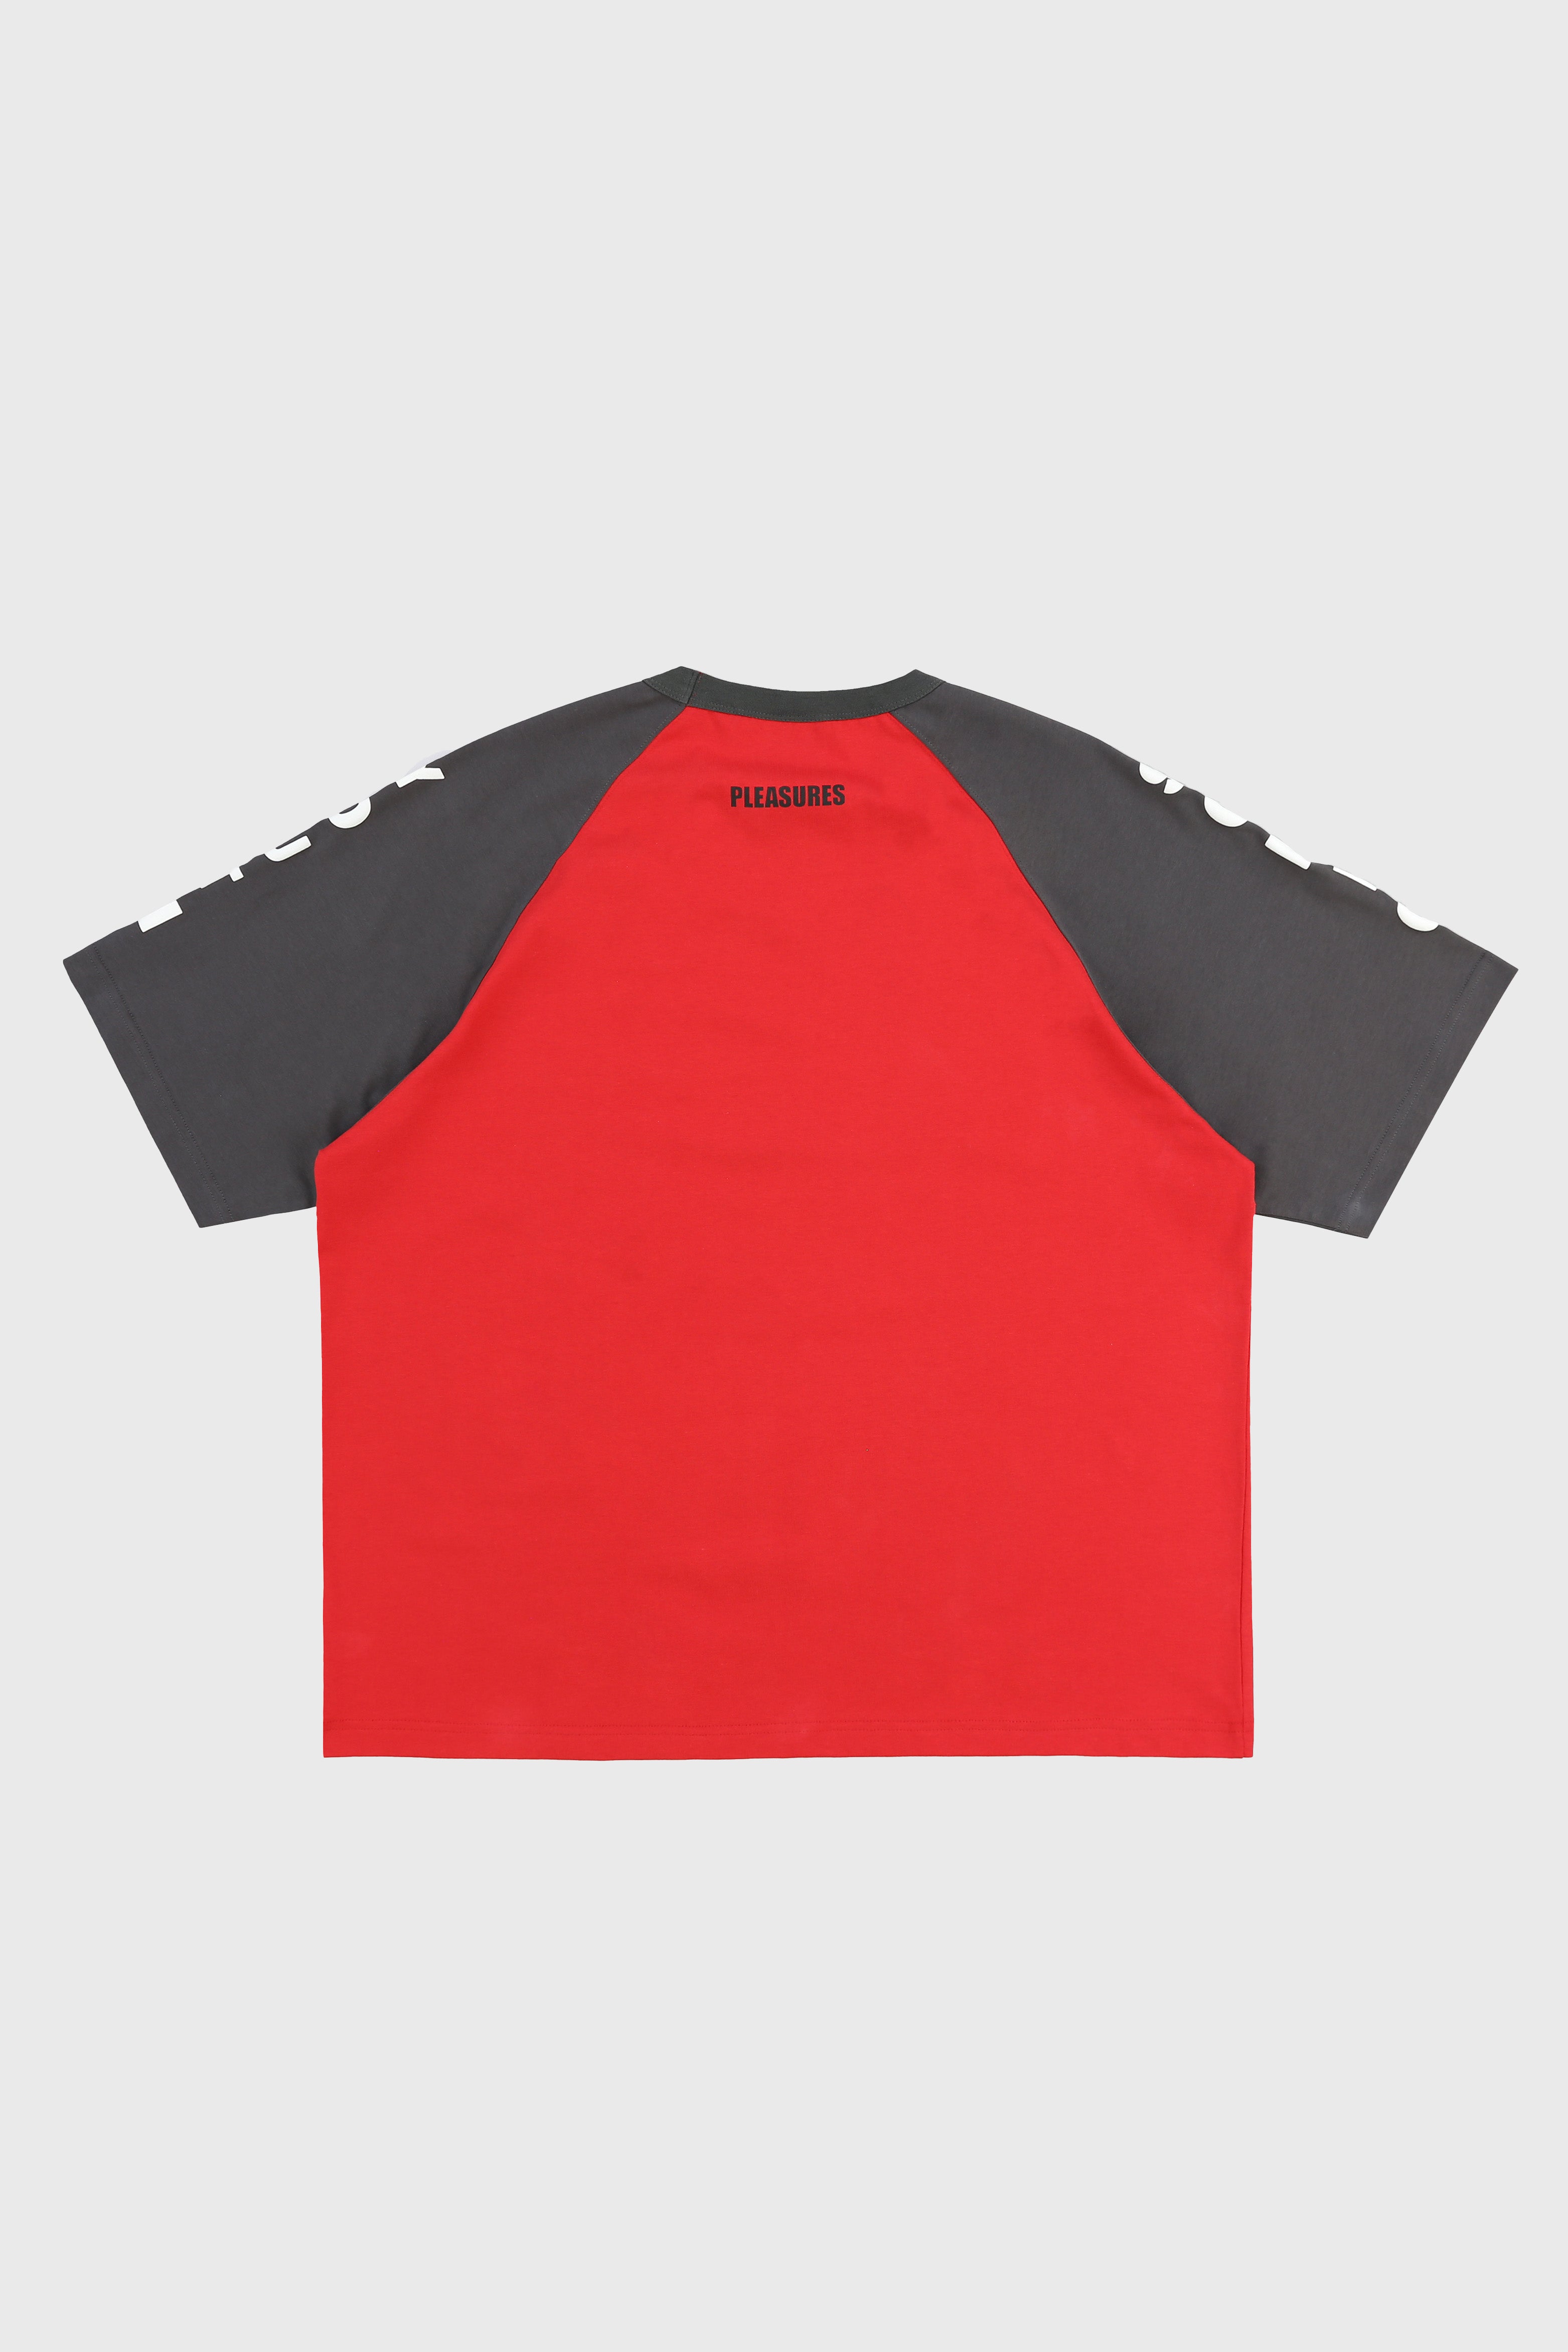 Selectshop FRAME - PLEASURES Gracias Raglan Tee T-Shirts Concept Store Dubai